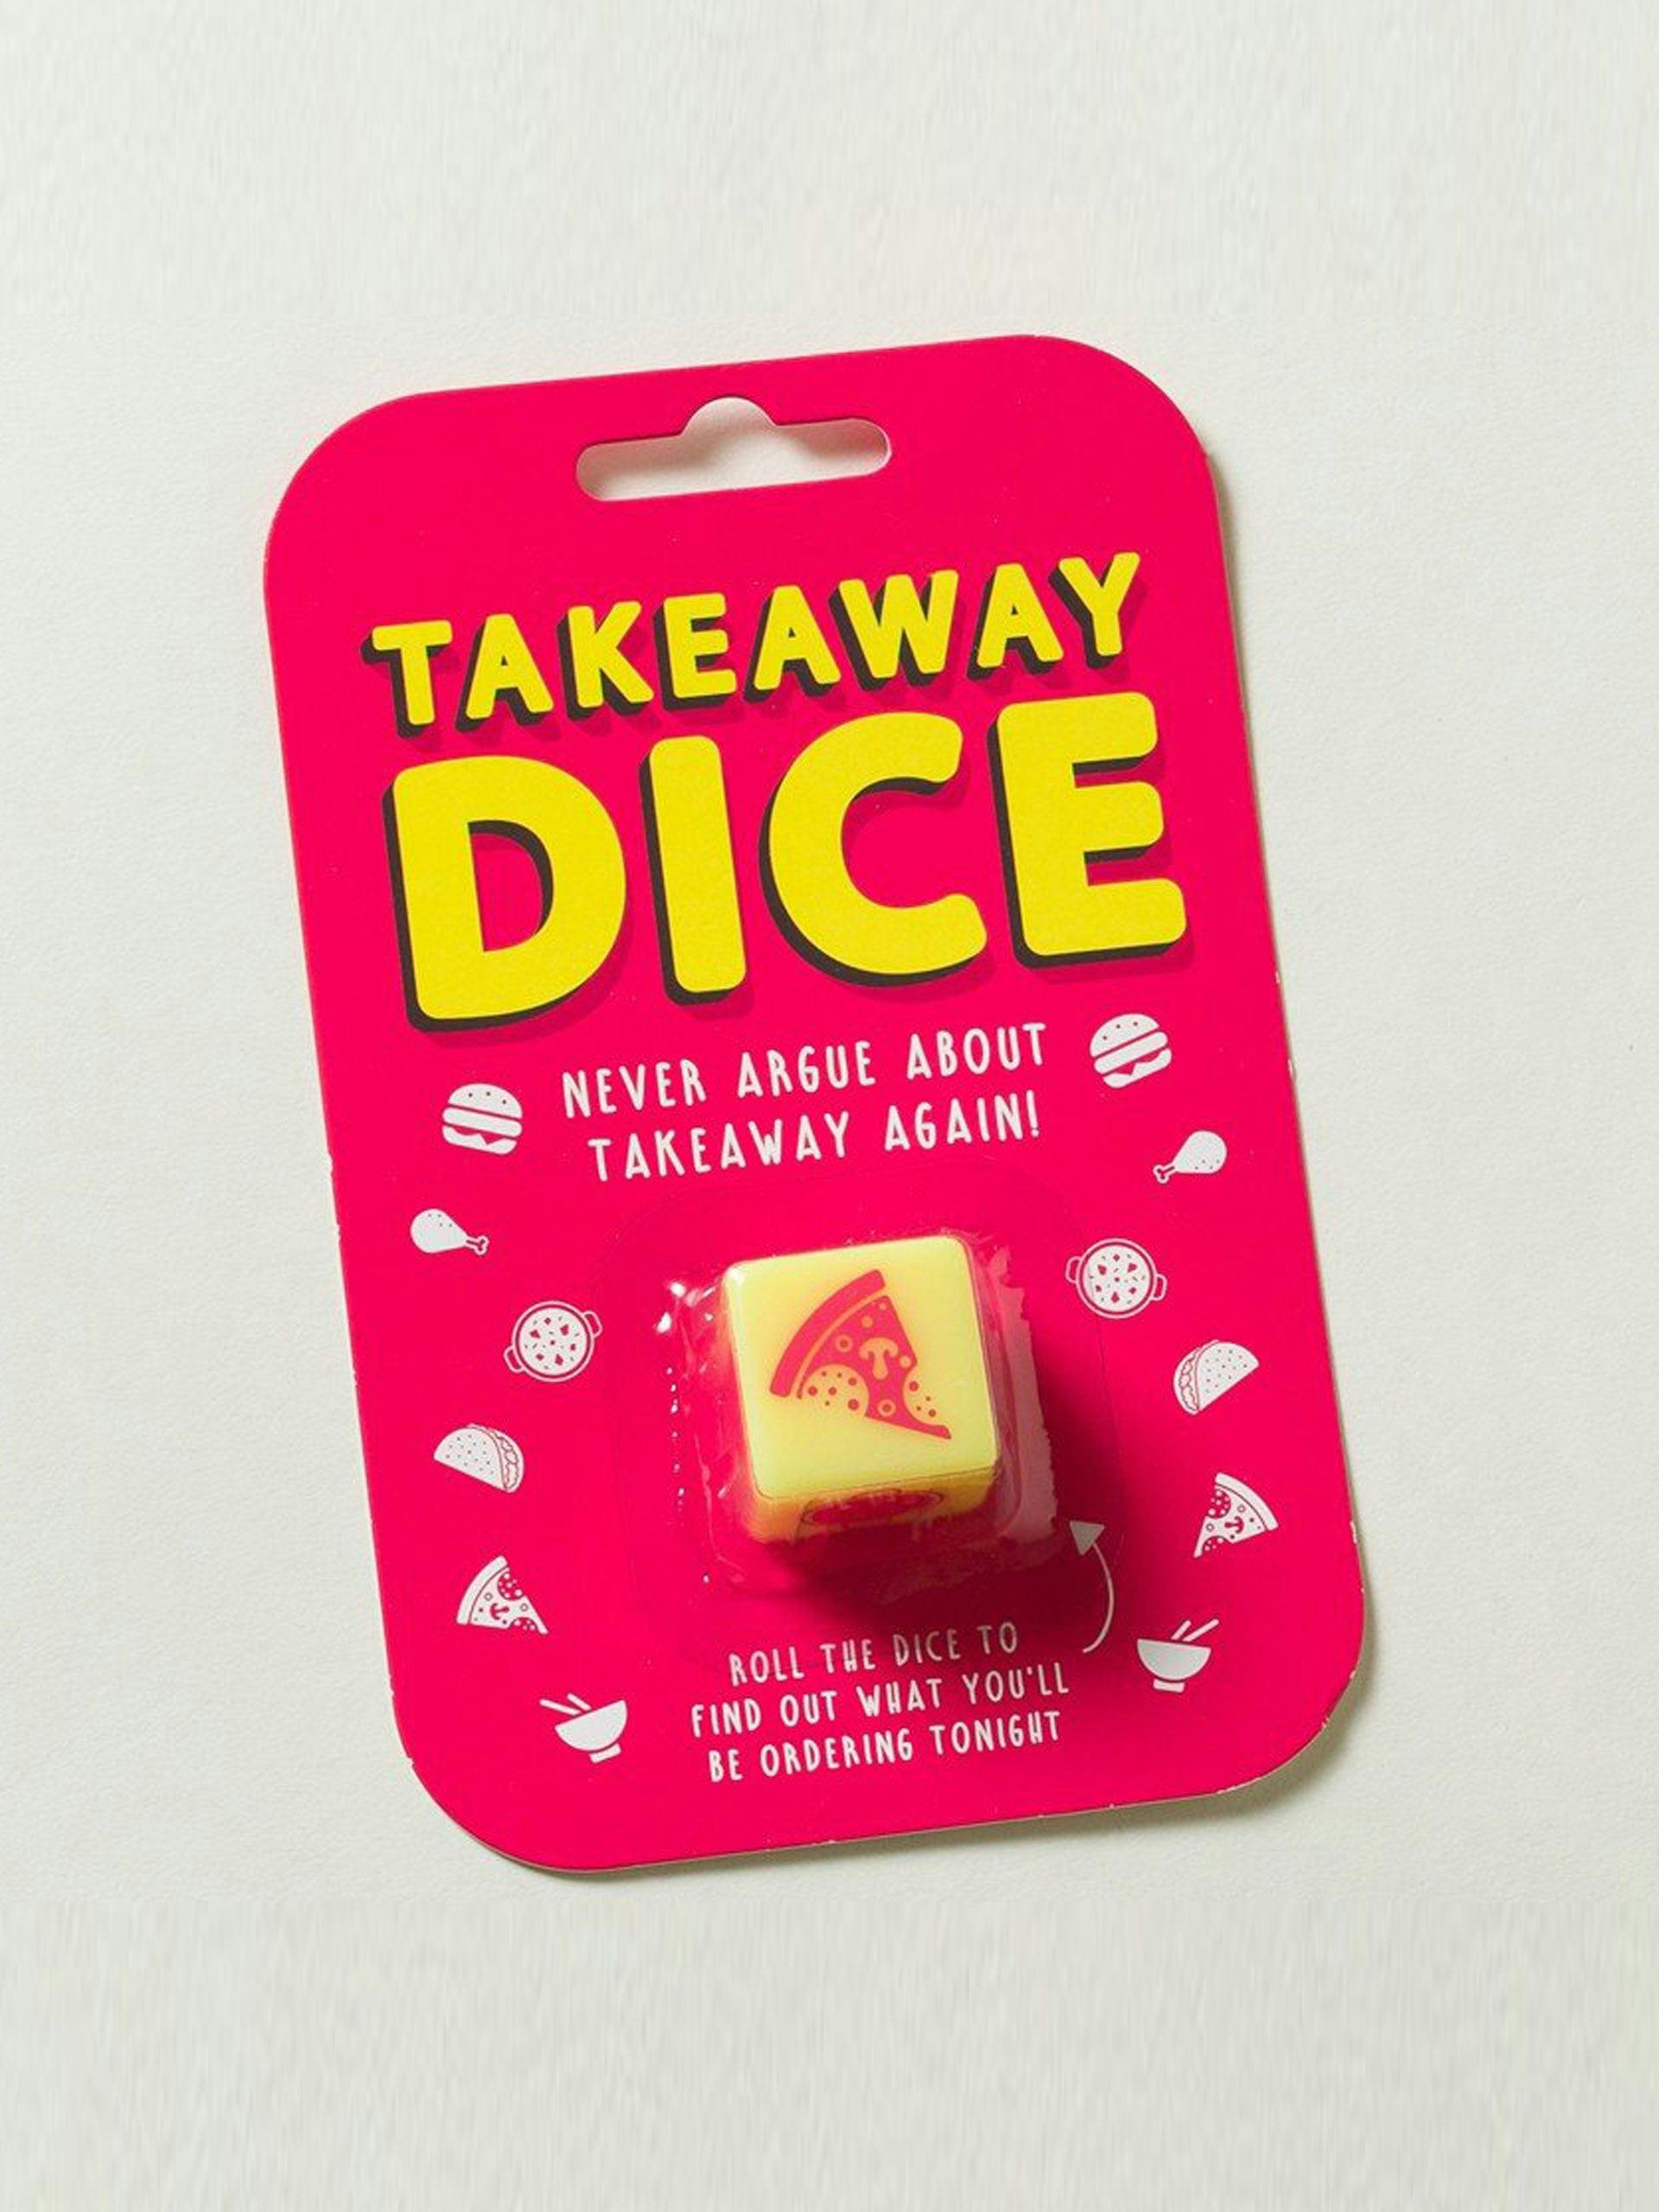 Takeaway dice